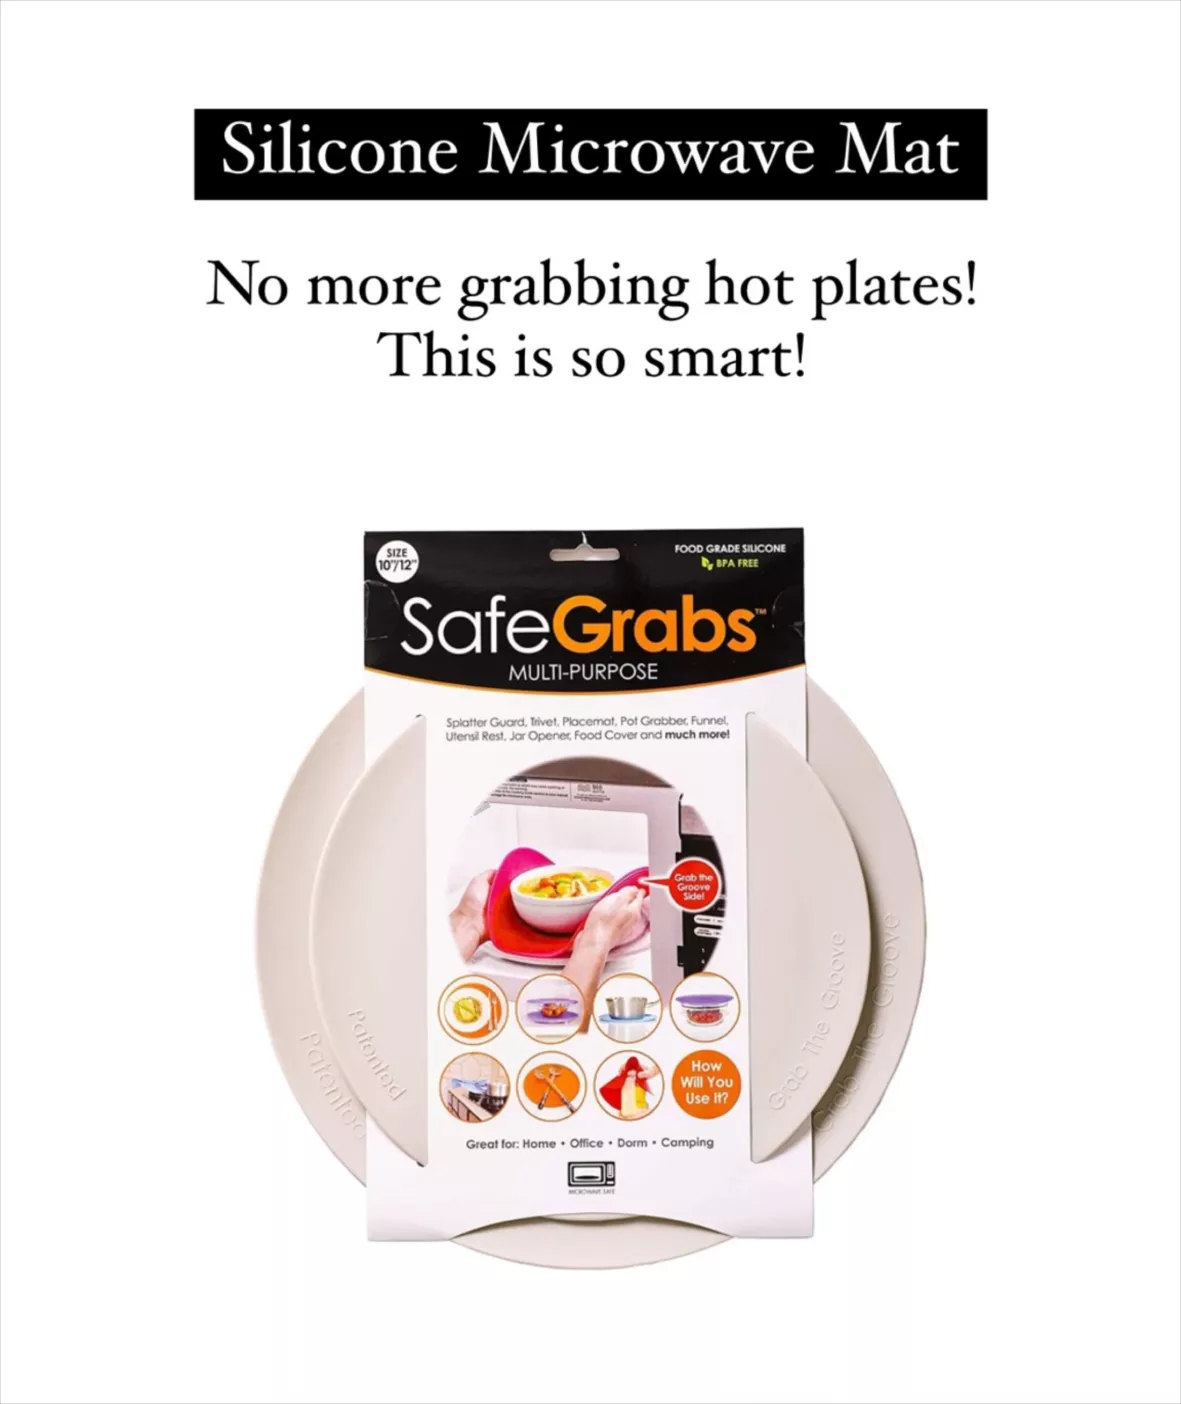 Safe Grabs Multi-Purpose Silicone Mats on